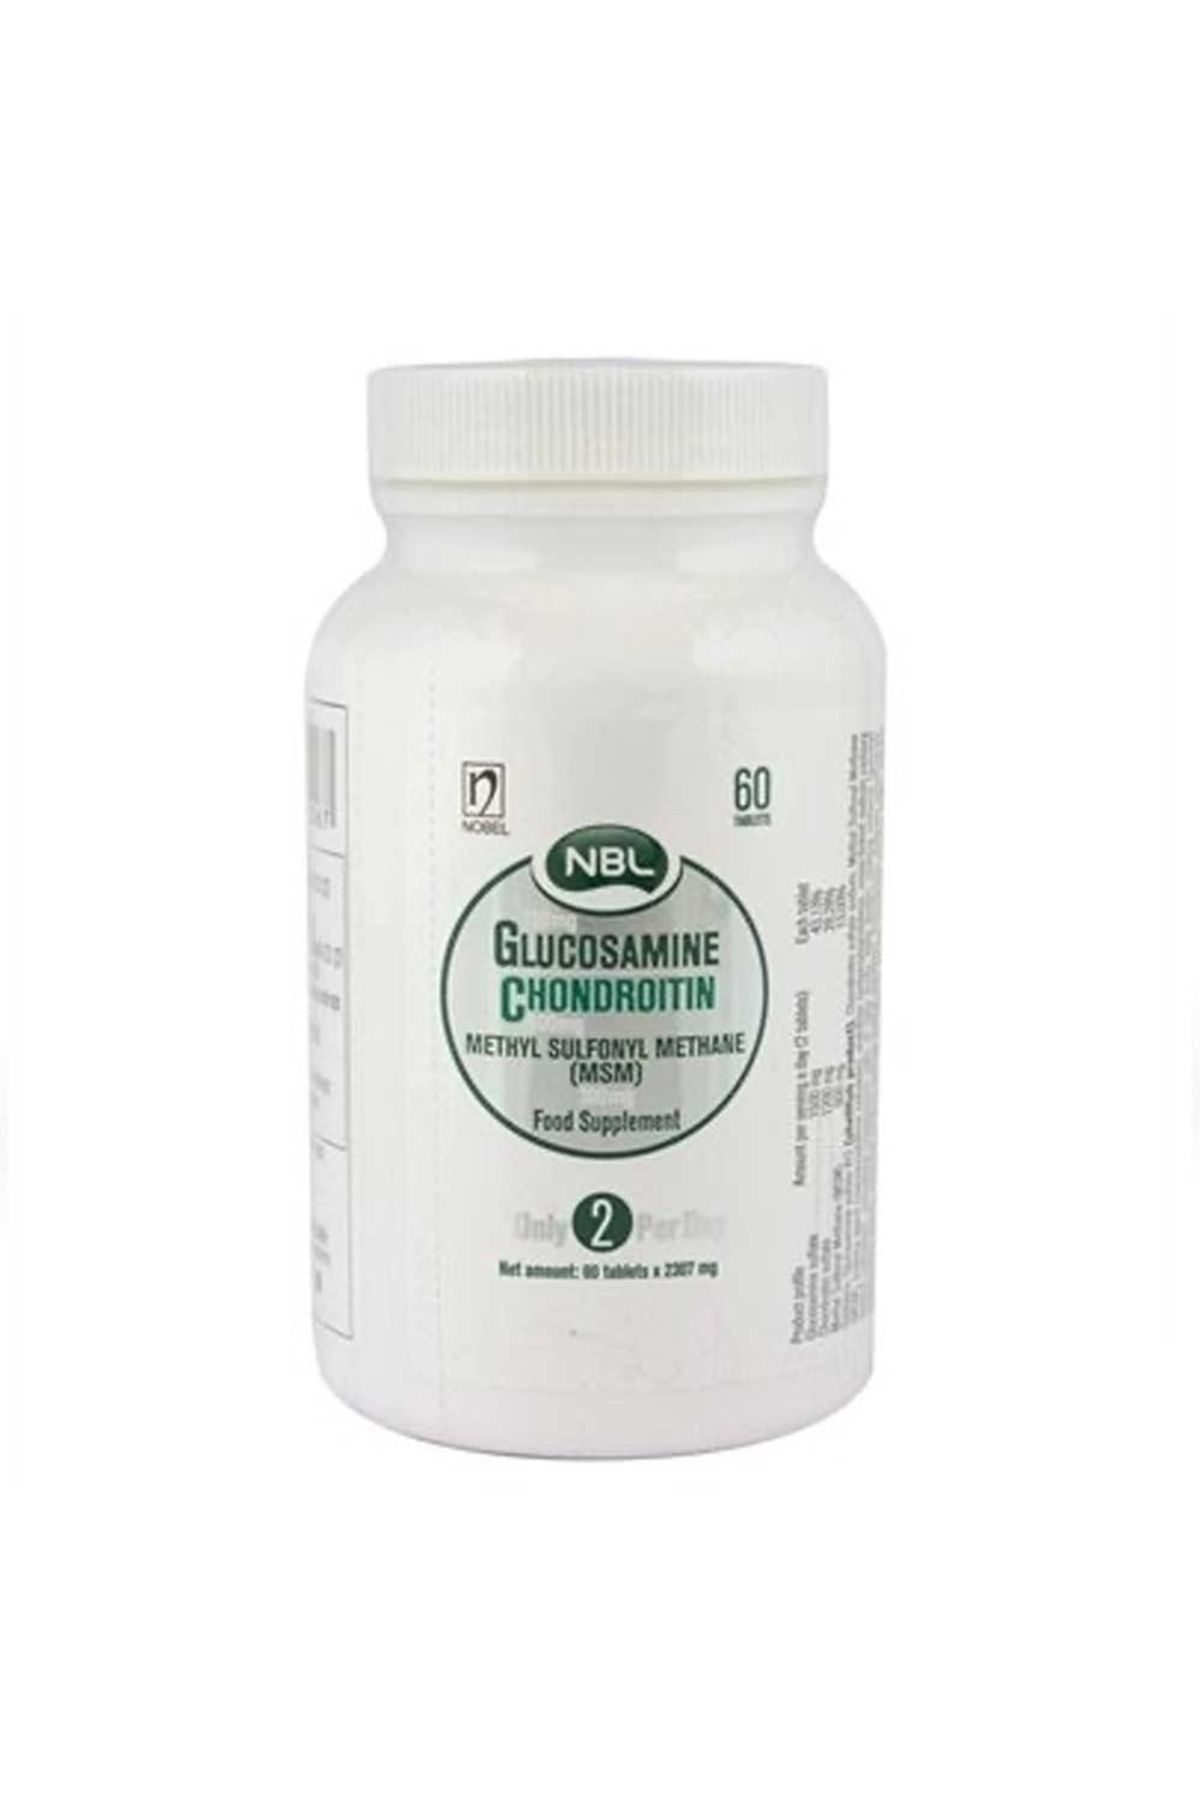 NBL Glukozamin Kondroitin Msm 60 Tablet